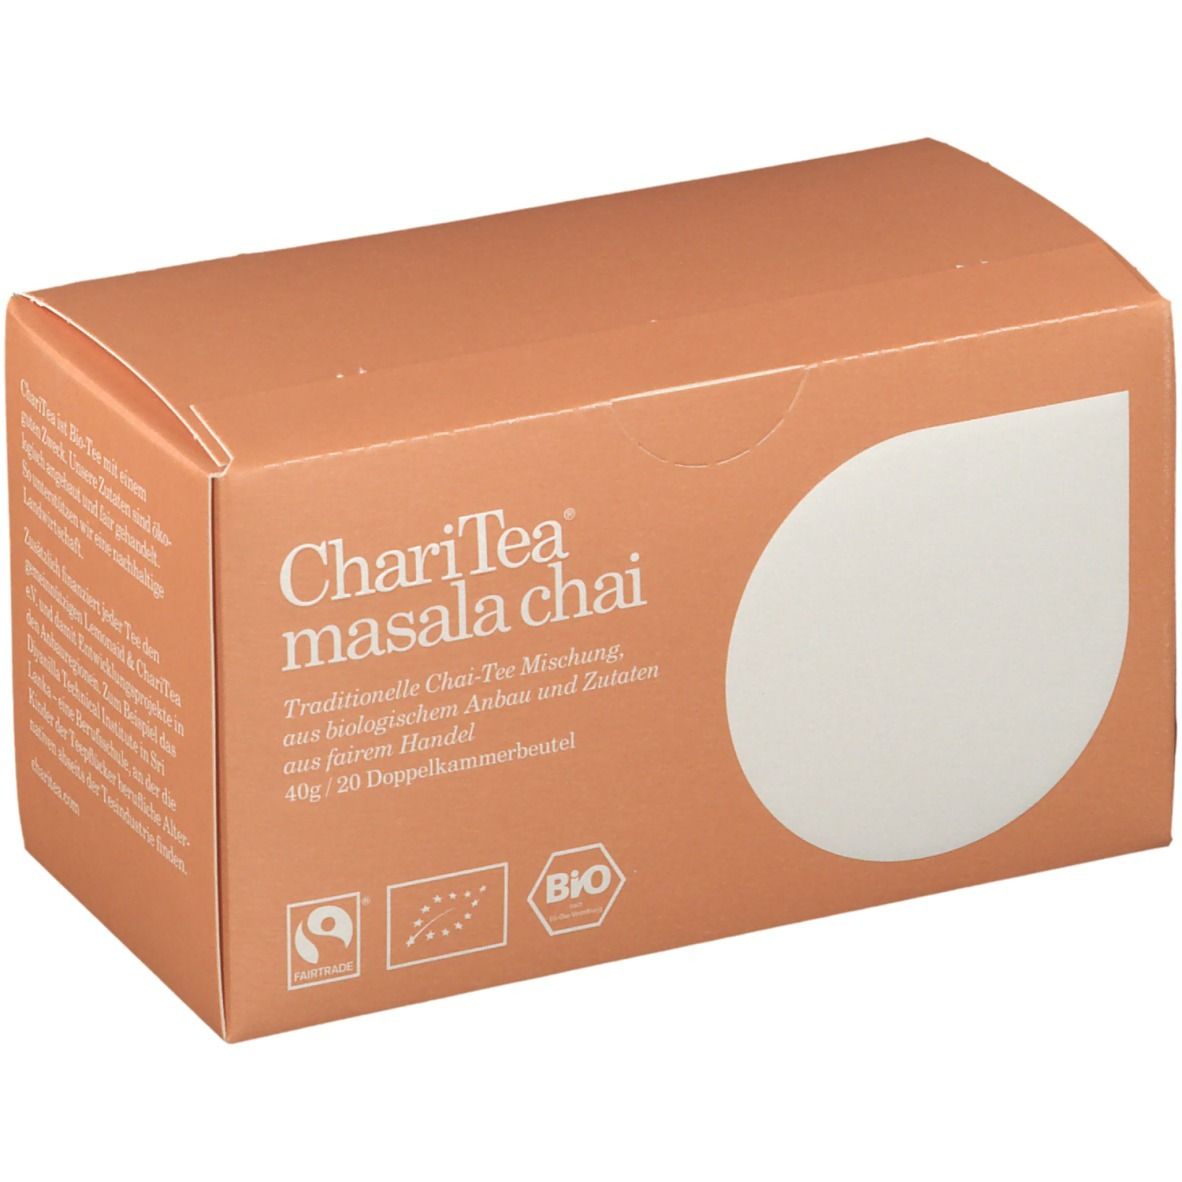 ChariTea® masala chai